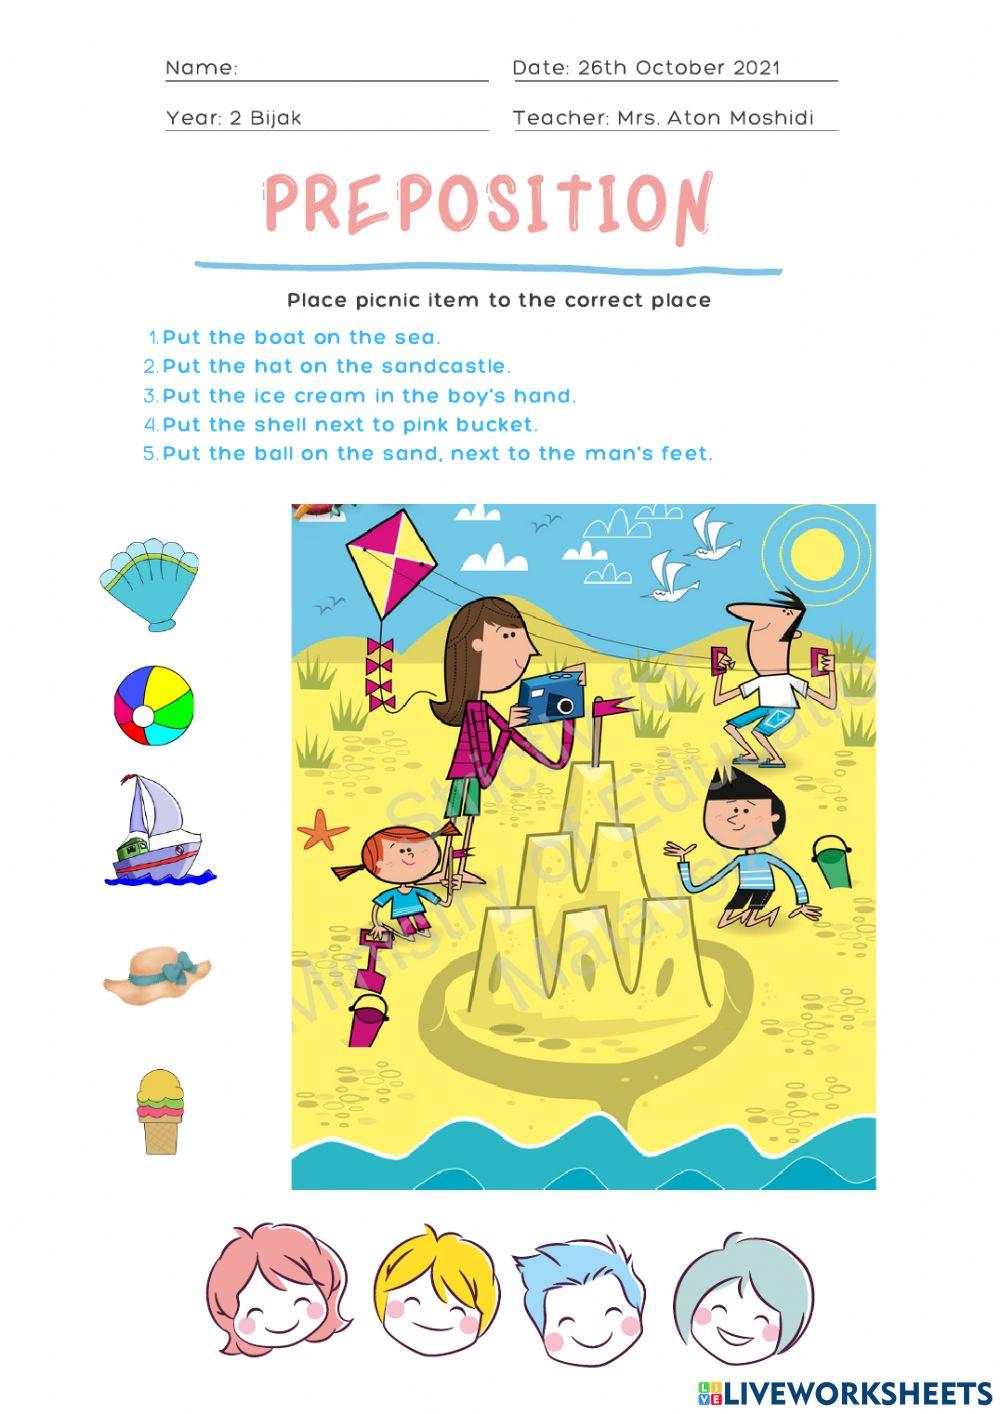 Preposition by Mrs. Aton Moshidi